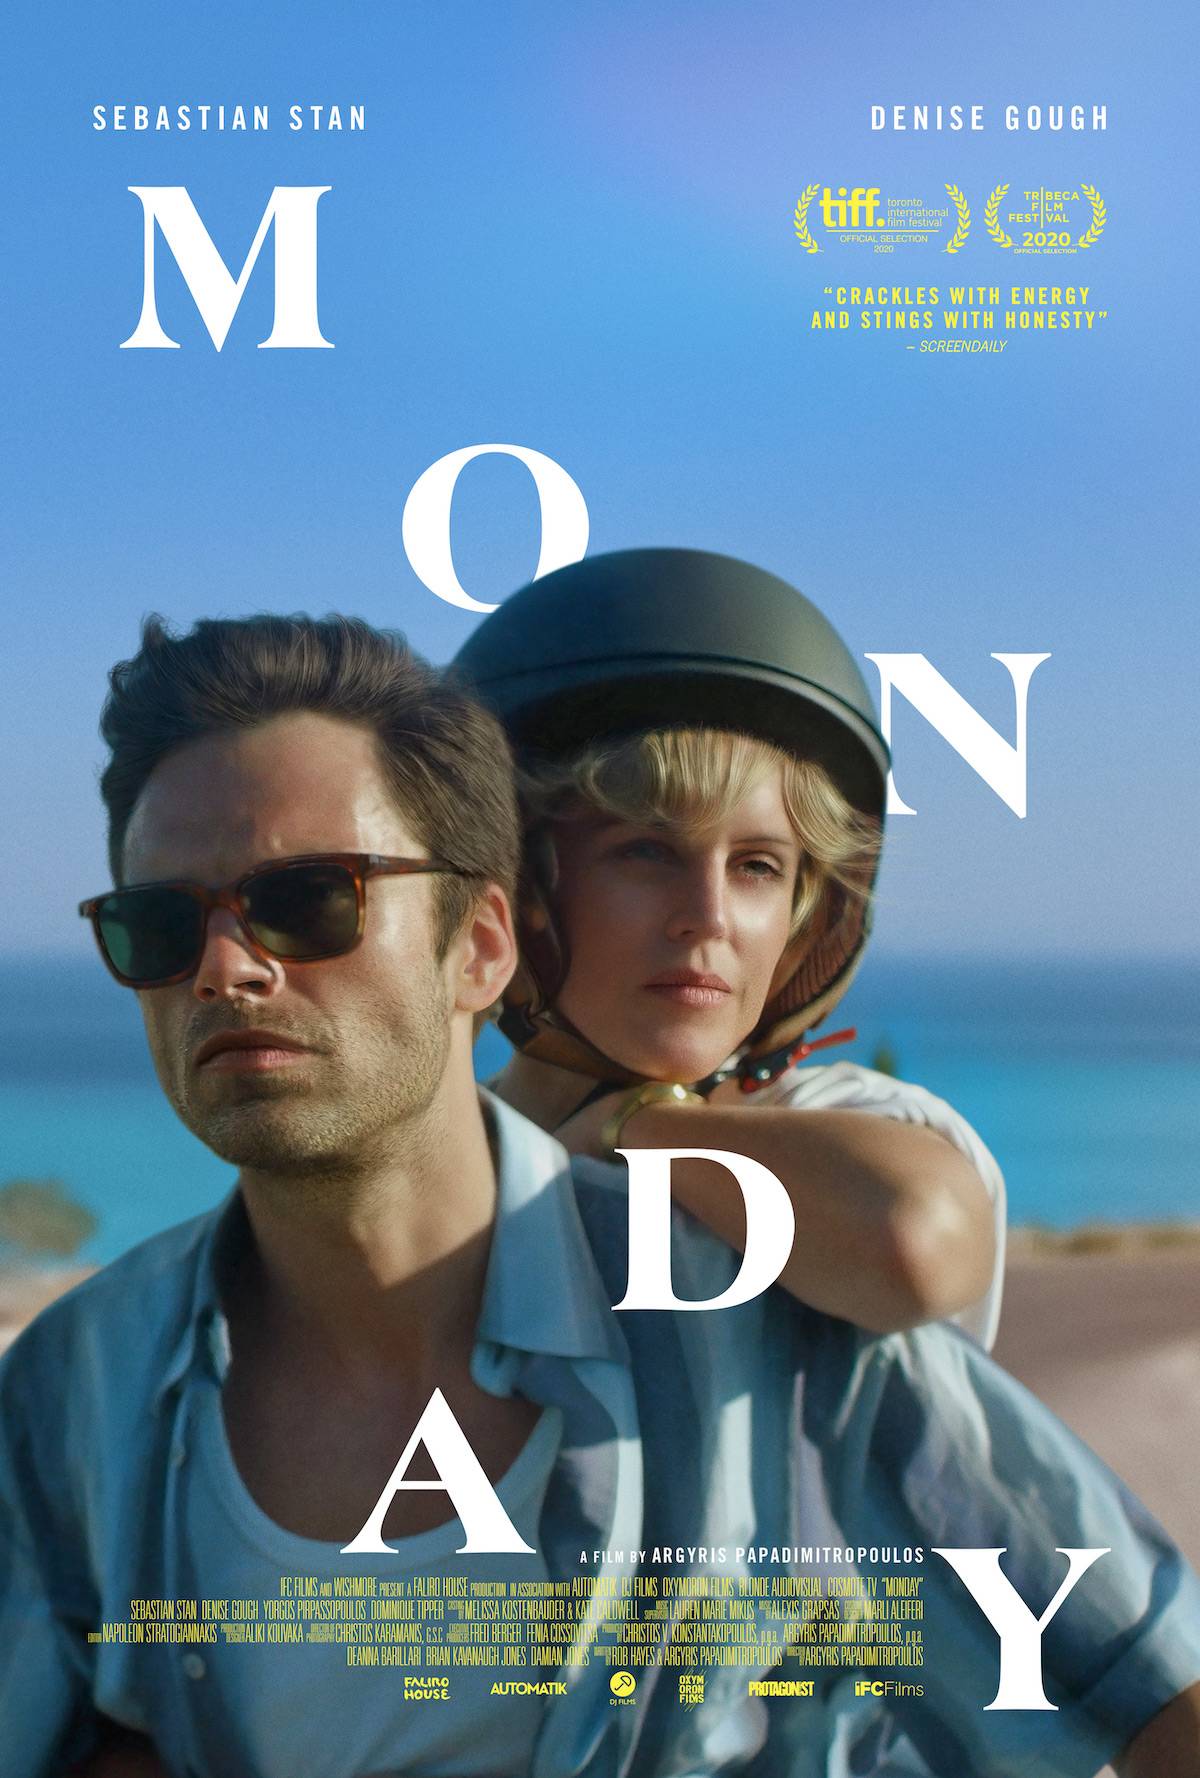 Monday Trailer Teases Sebastian Stan, Denise Gough Romantic Drama